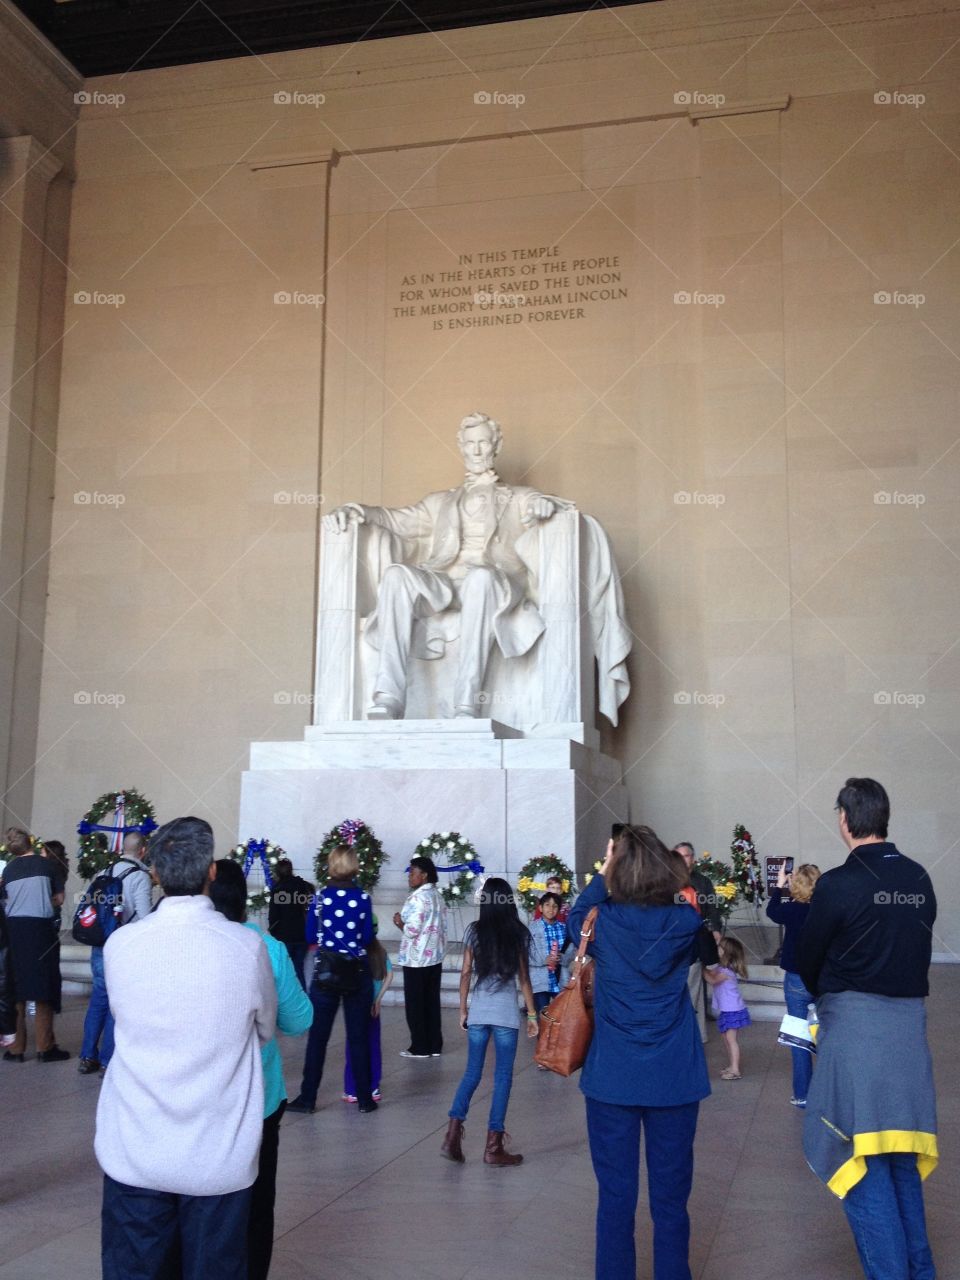 The Lincoln Memorial in a Washington, DC